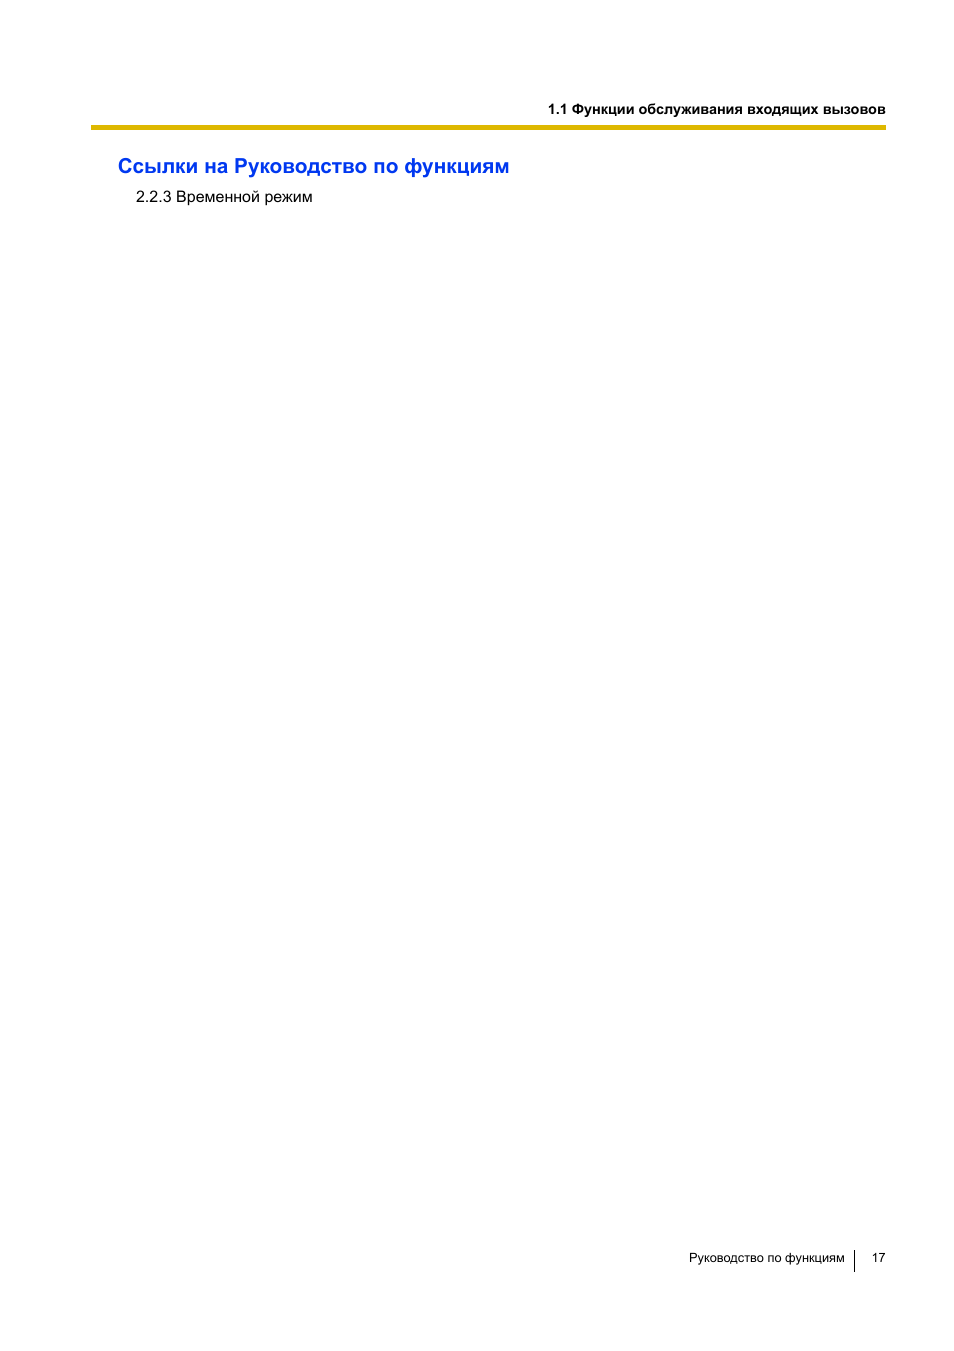 Ссылки на руководство по функциям | Инструкция по эксплуатации Panasonic KX-TEA308RU | Страница 17 / 318